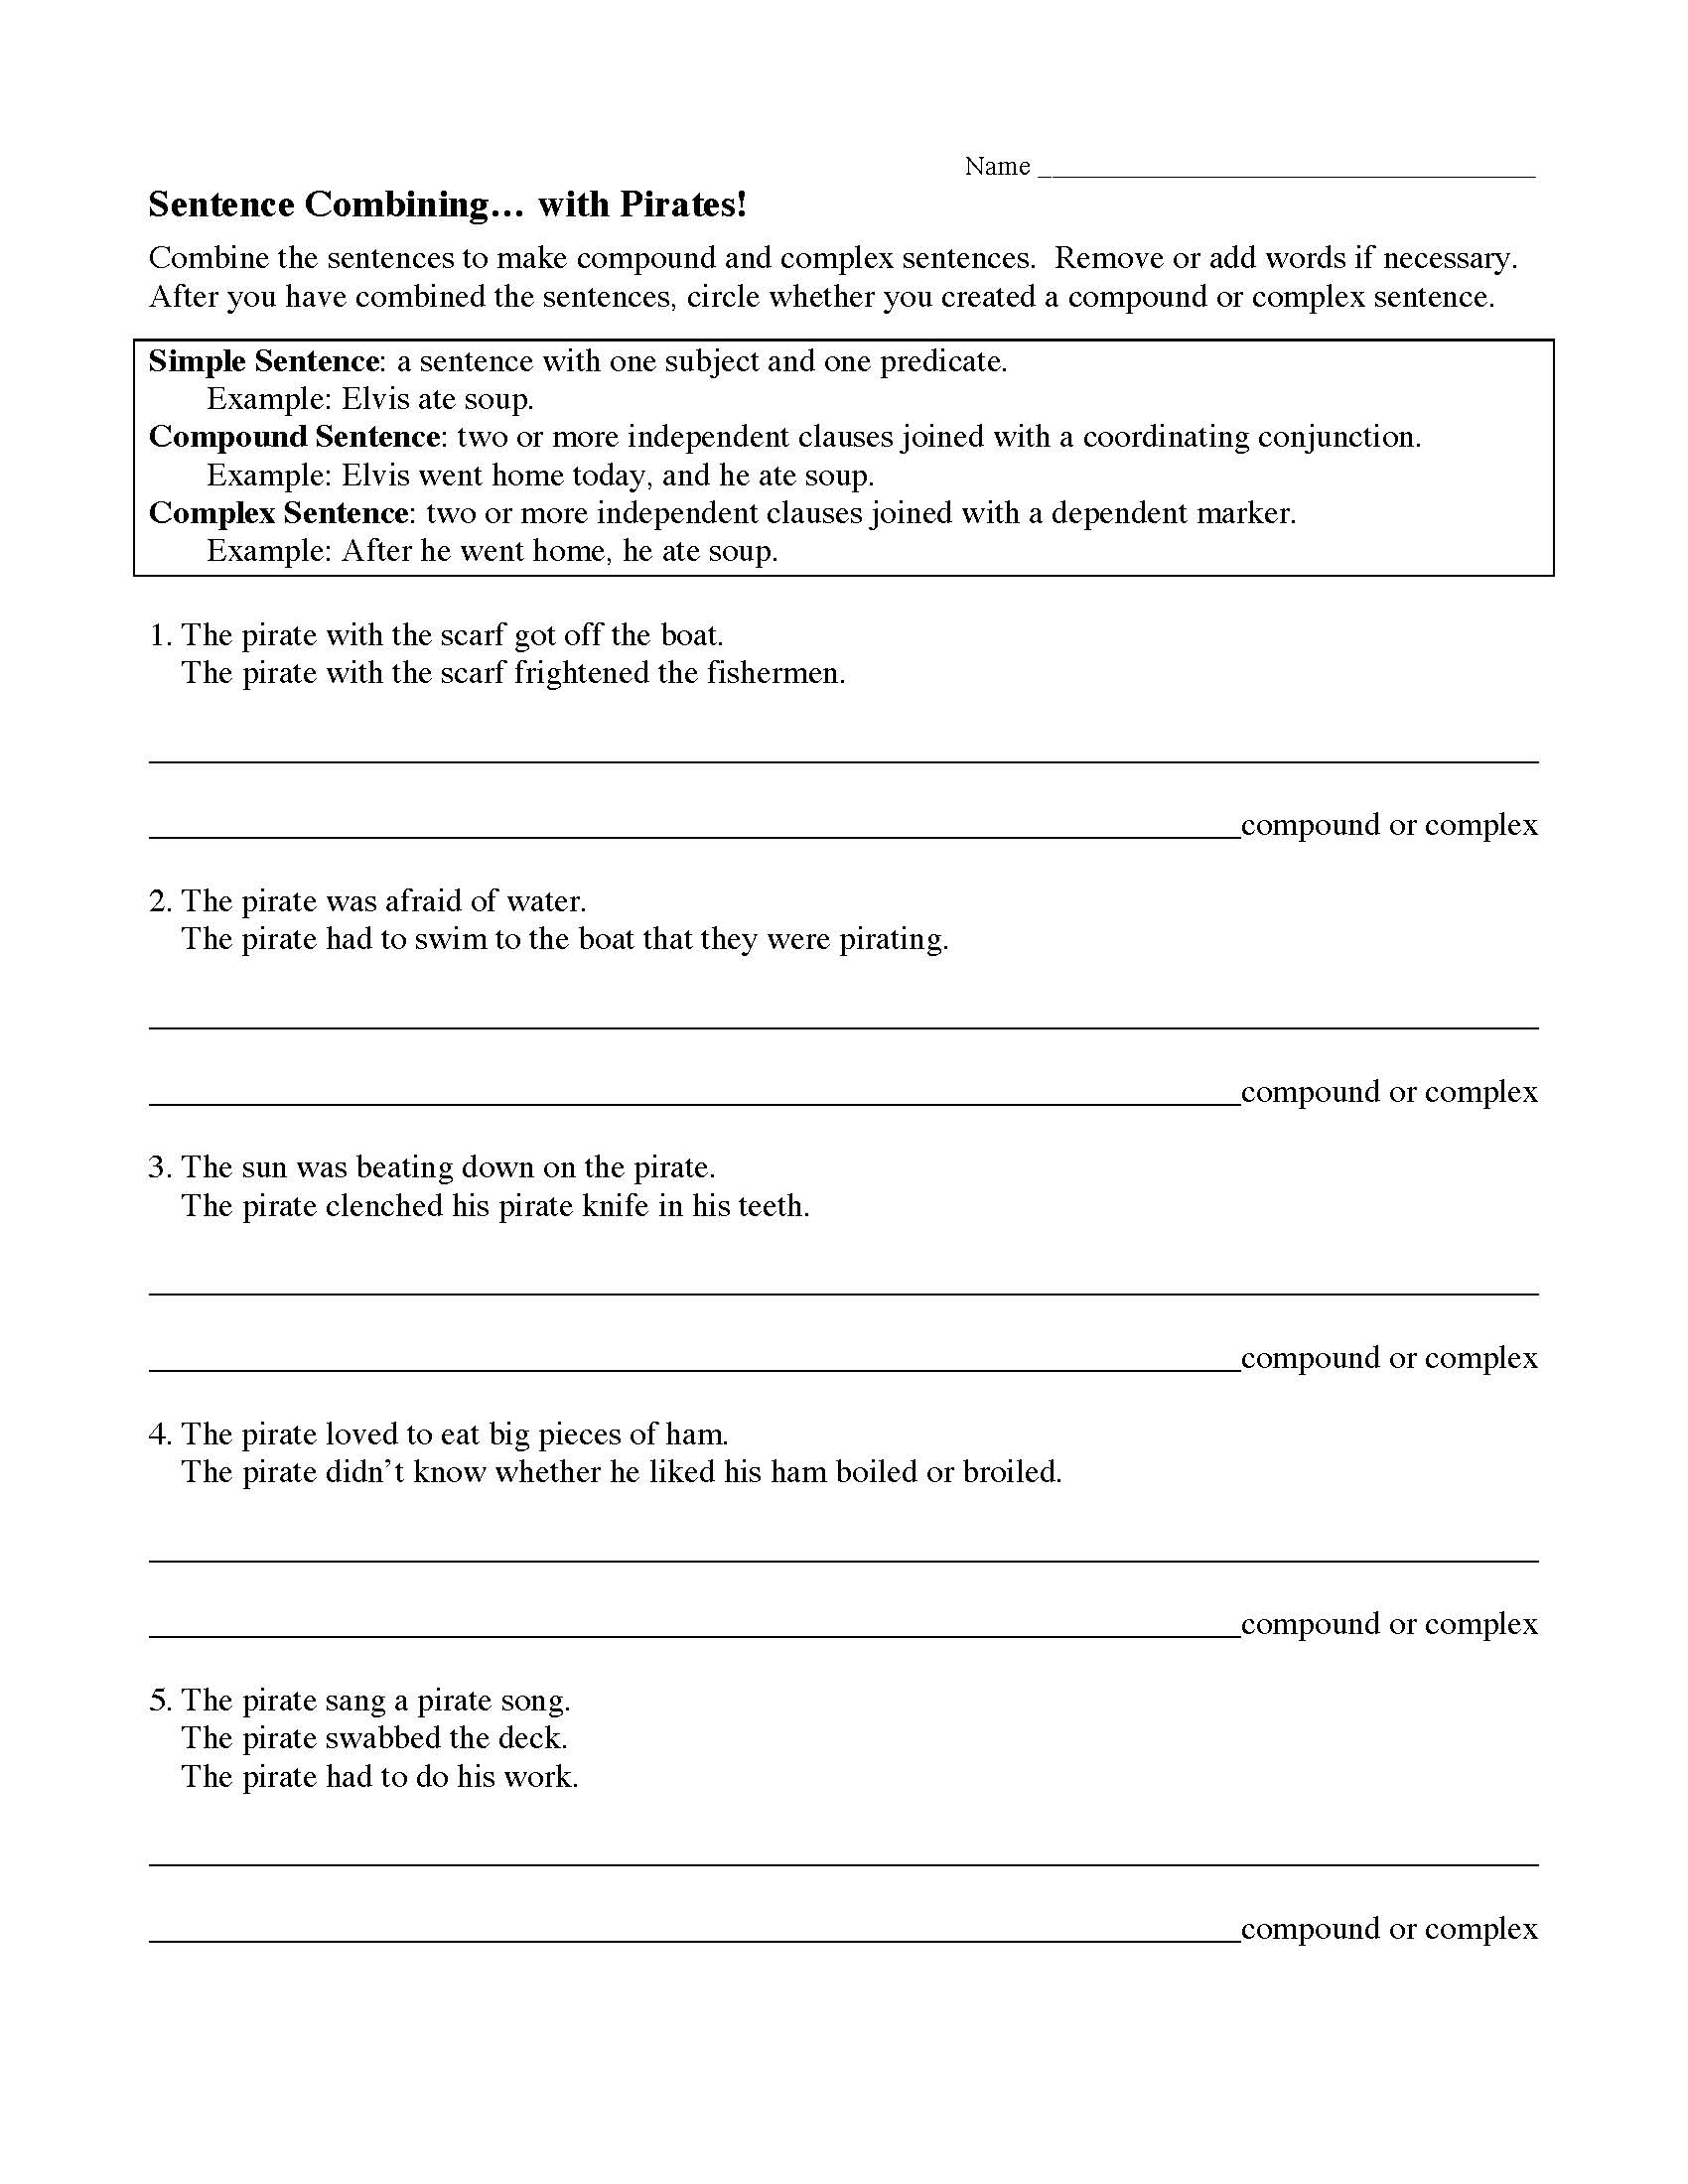 Sentences Combining with Pirates Worksheet  Preview For Compound Sentences Worksheet Pdf